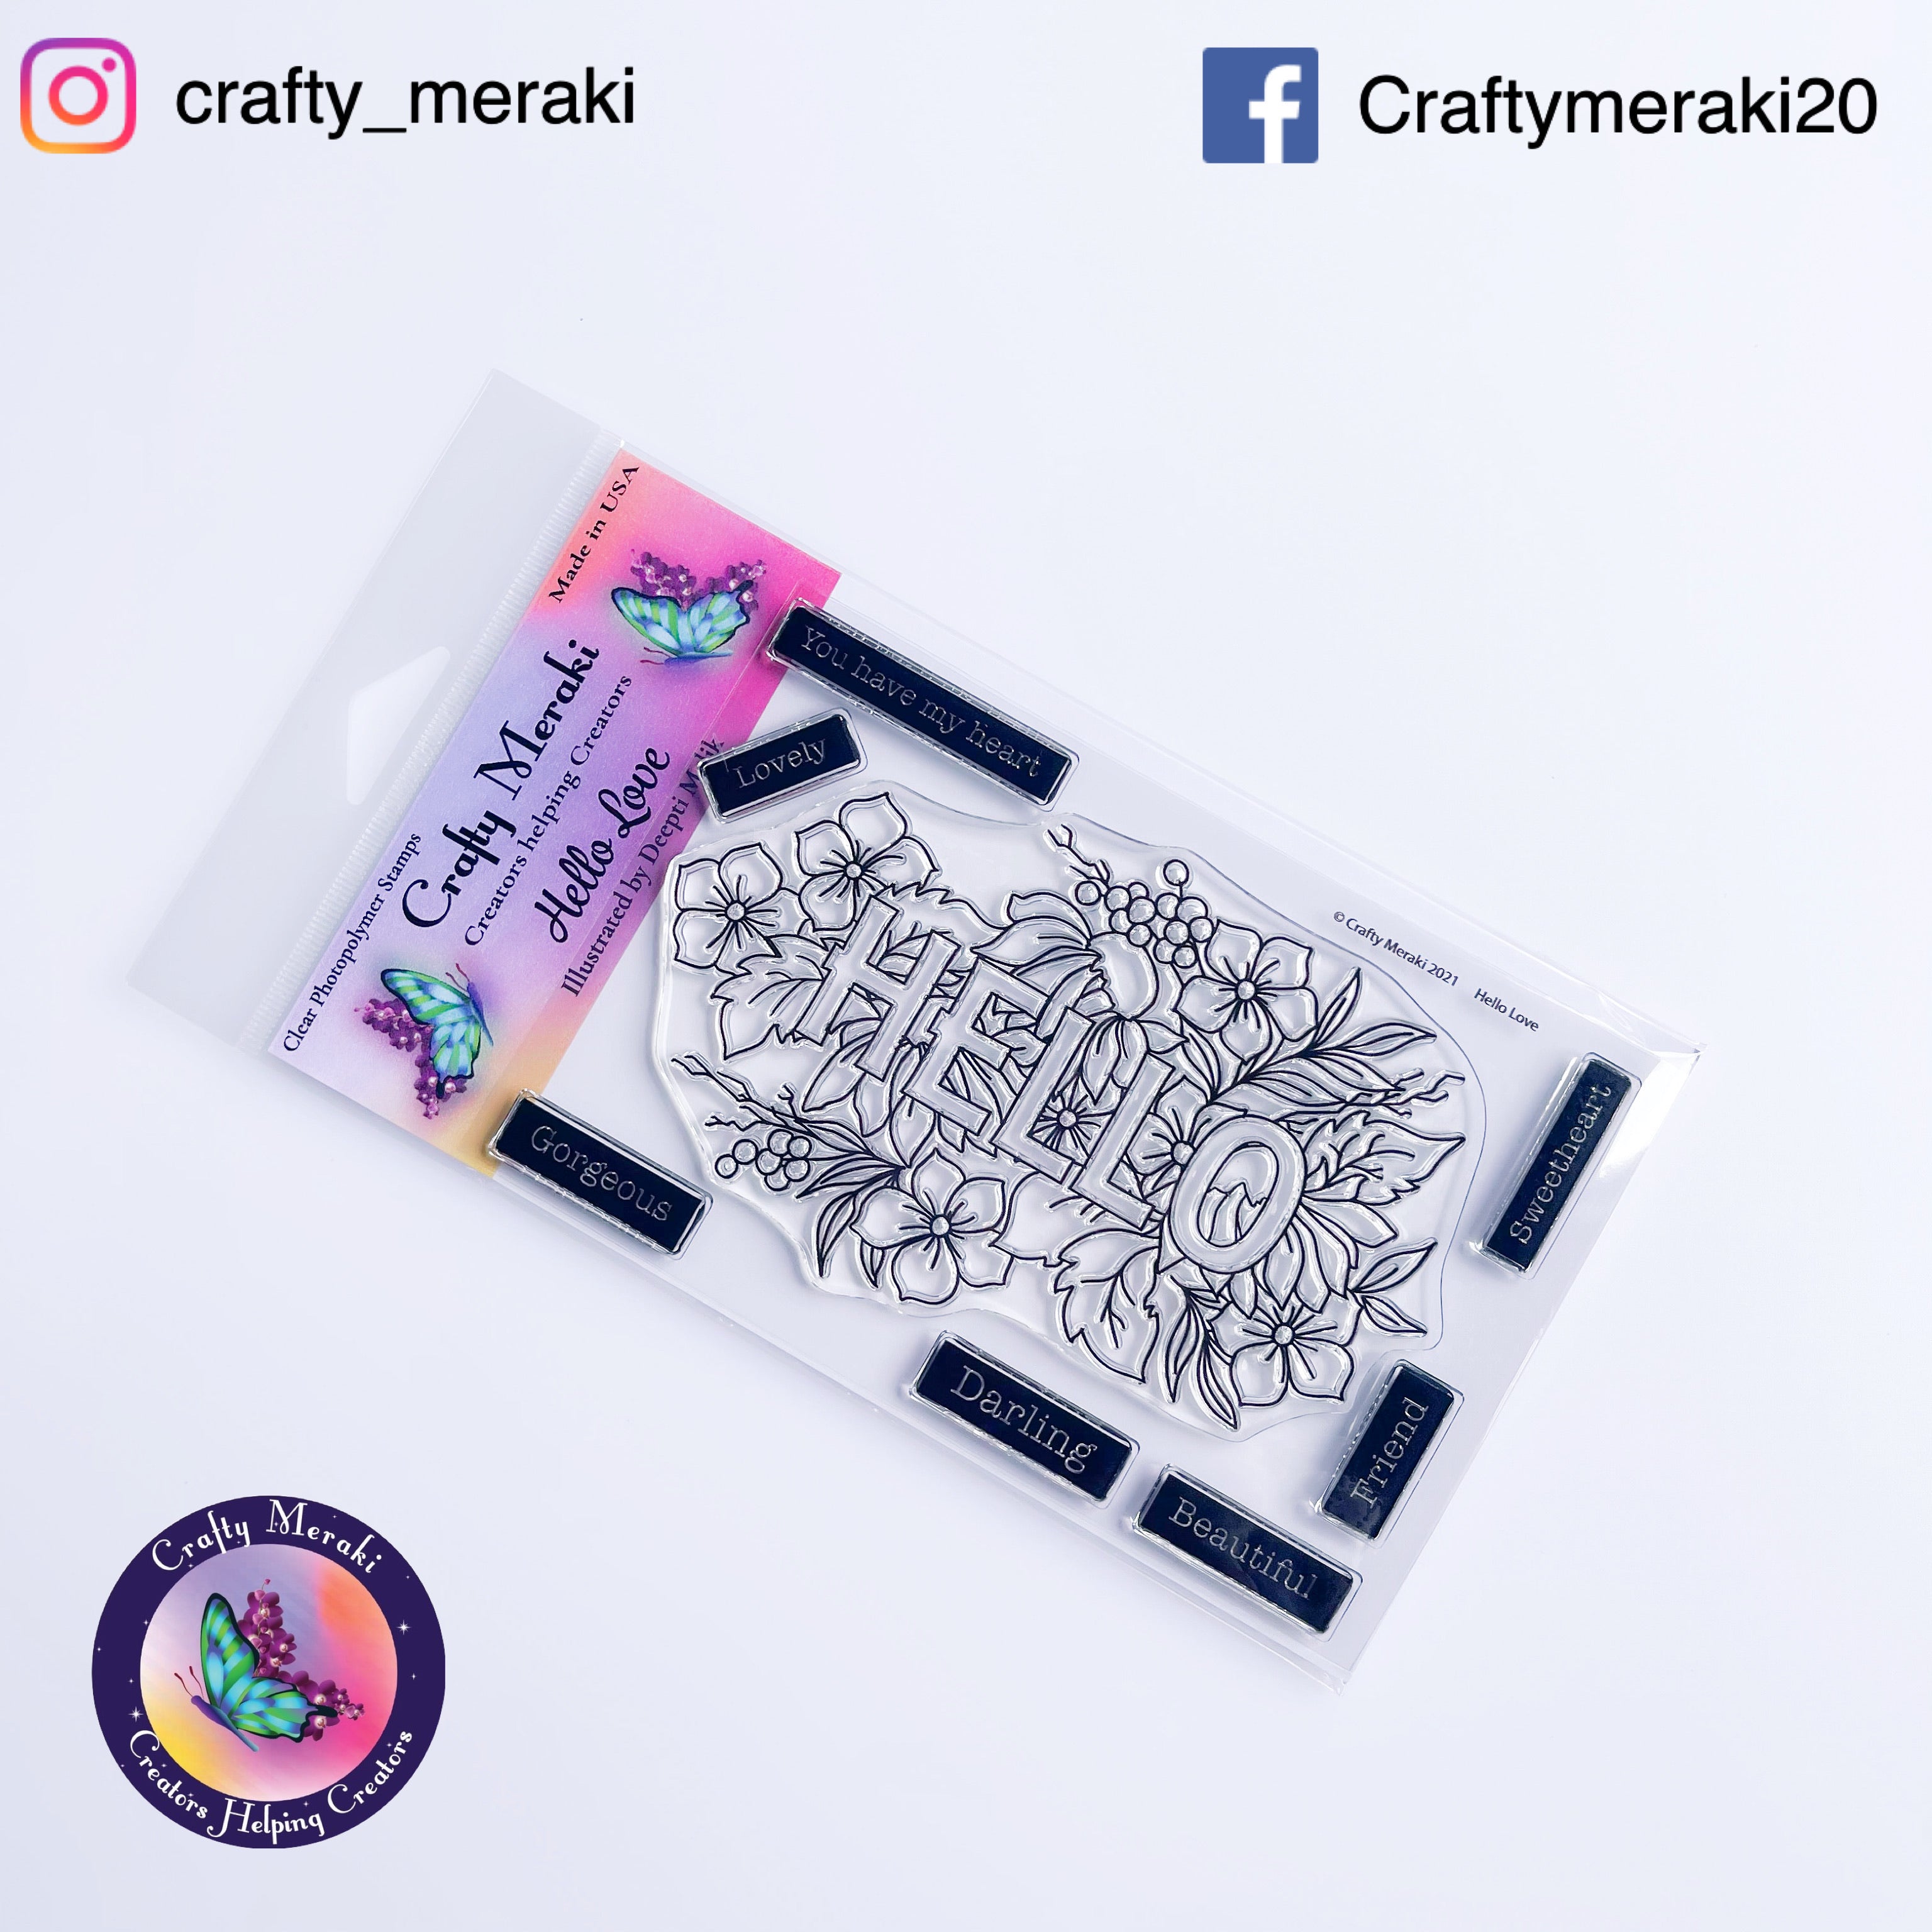 Crafty Meraki Hello Love Stamp set - Crafty Meraki